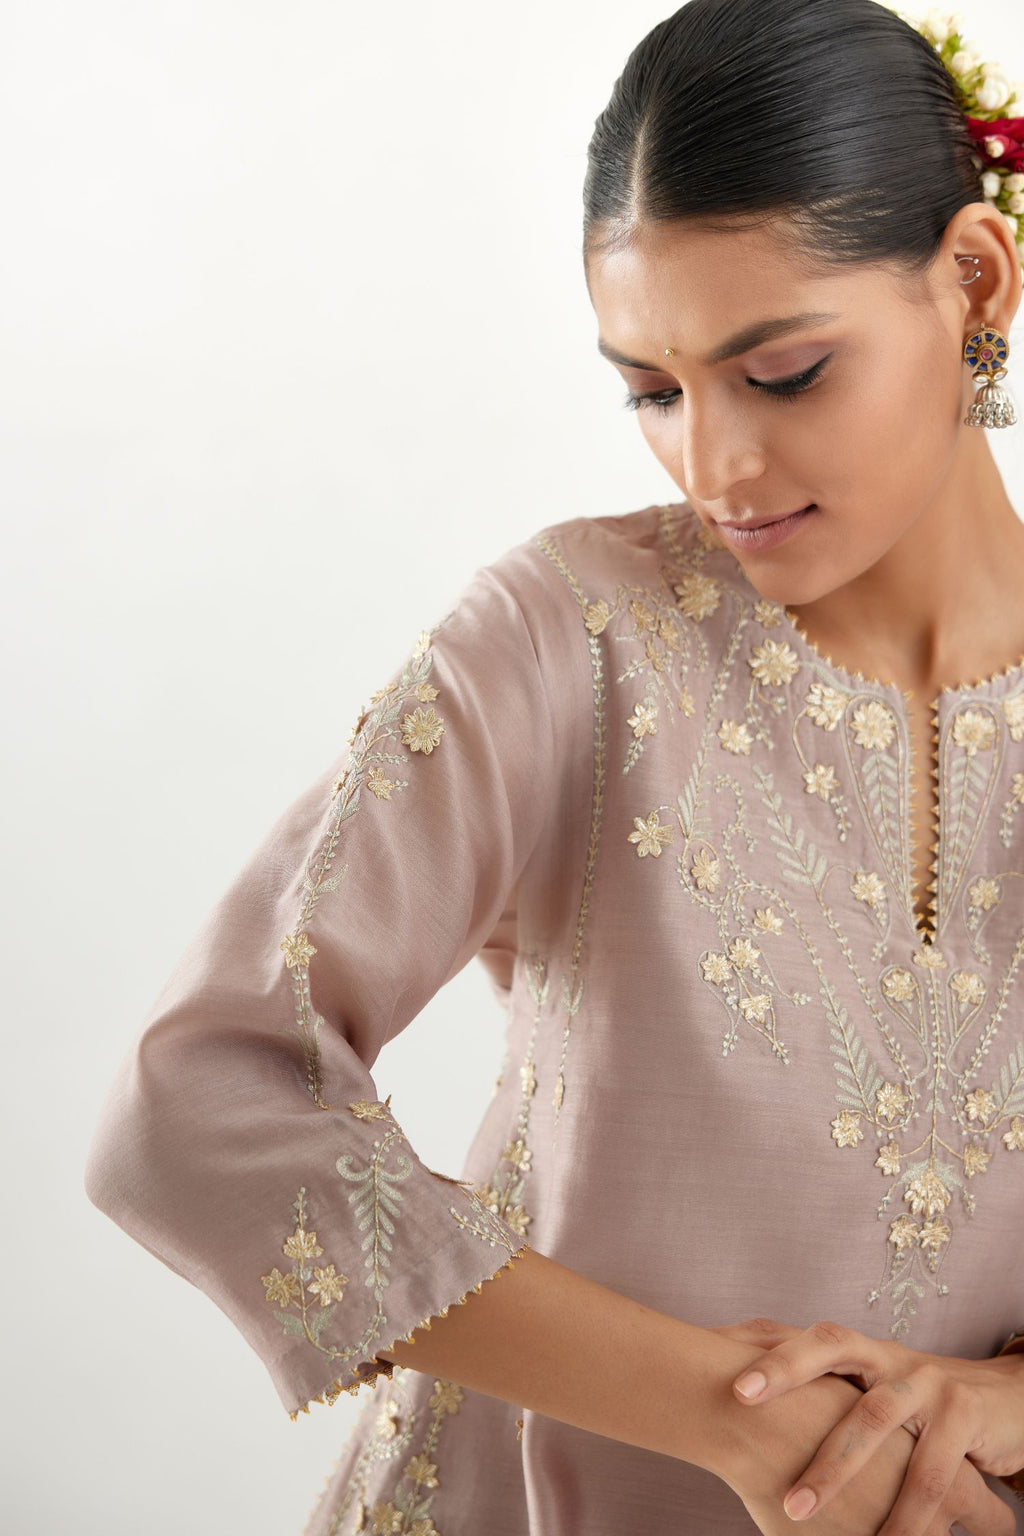 Lilac gold gota and zari embroidered easy fit short kalidar kurta set.